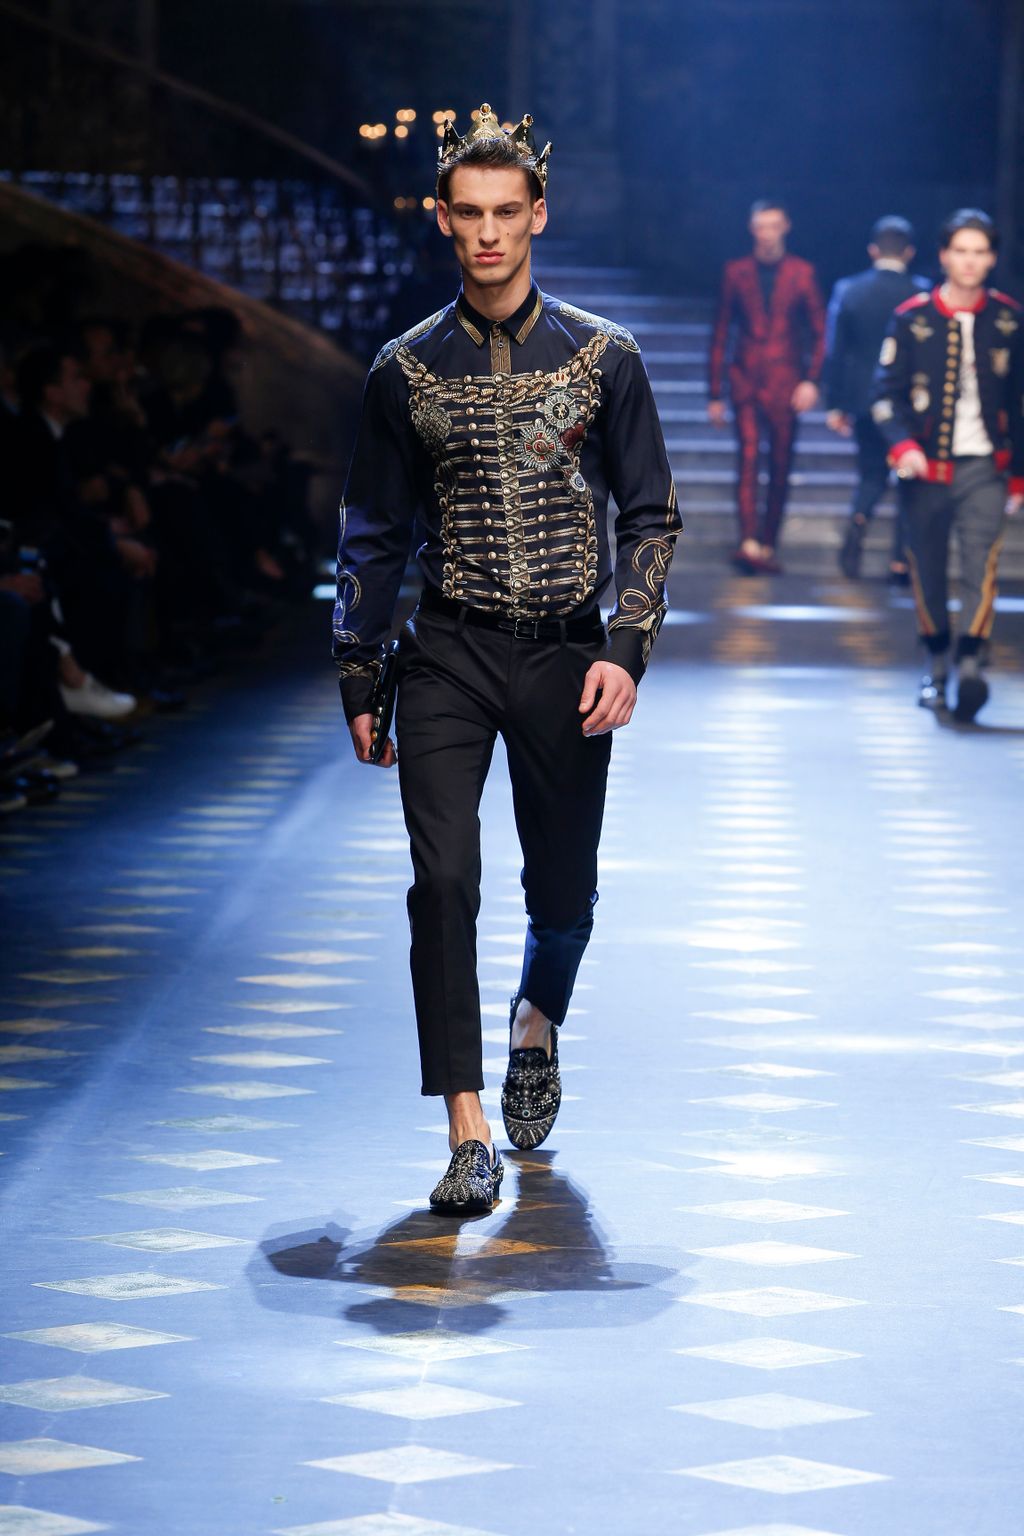 David Beckham Louis Vuitton Menswear F/W 17/18 Show at Paris